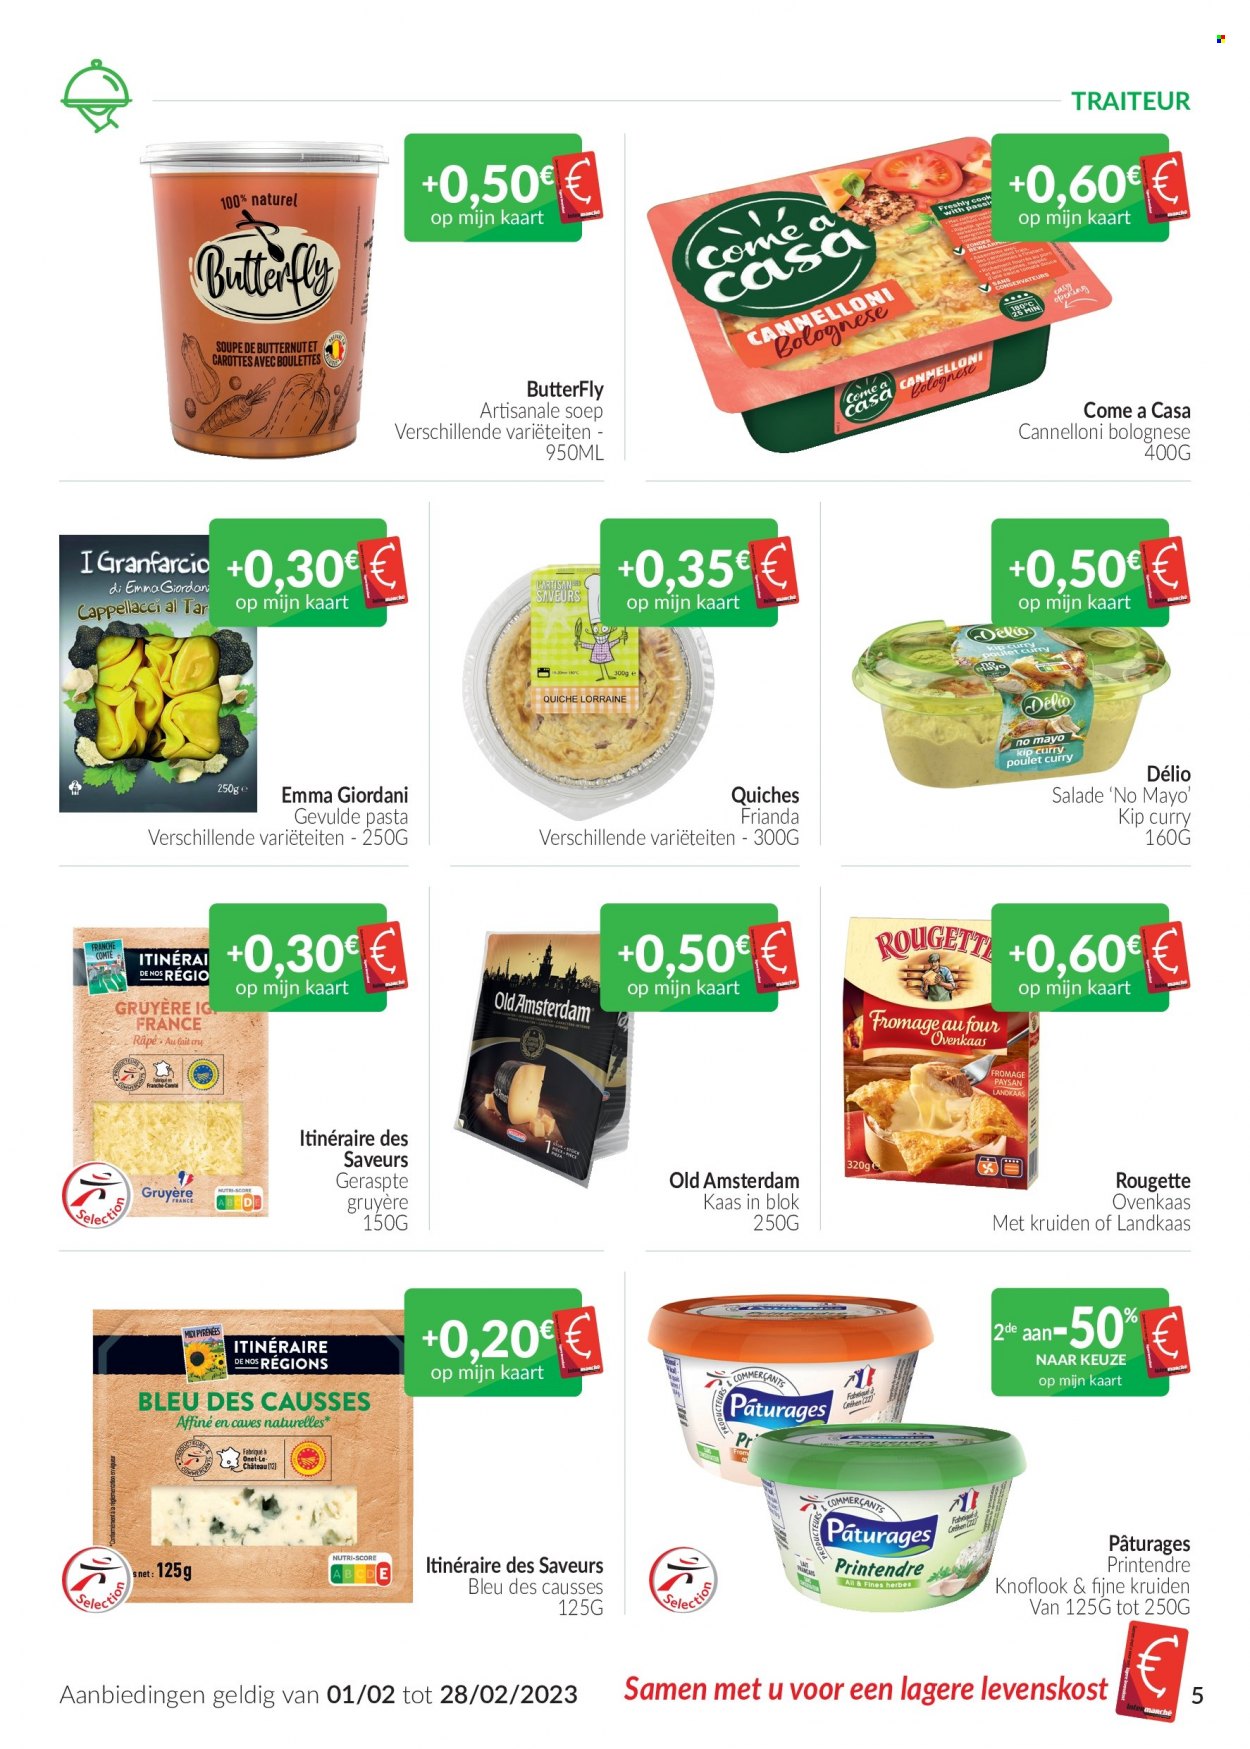 thumbnail - Intermarché-aanbieding - 01/02/2023 - 28/02/2023 -  producten in de aanbieding - Rougette, soep, kaas, Old Amsterdam, Gruyère, pasta, curry. Pagina 5.